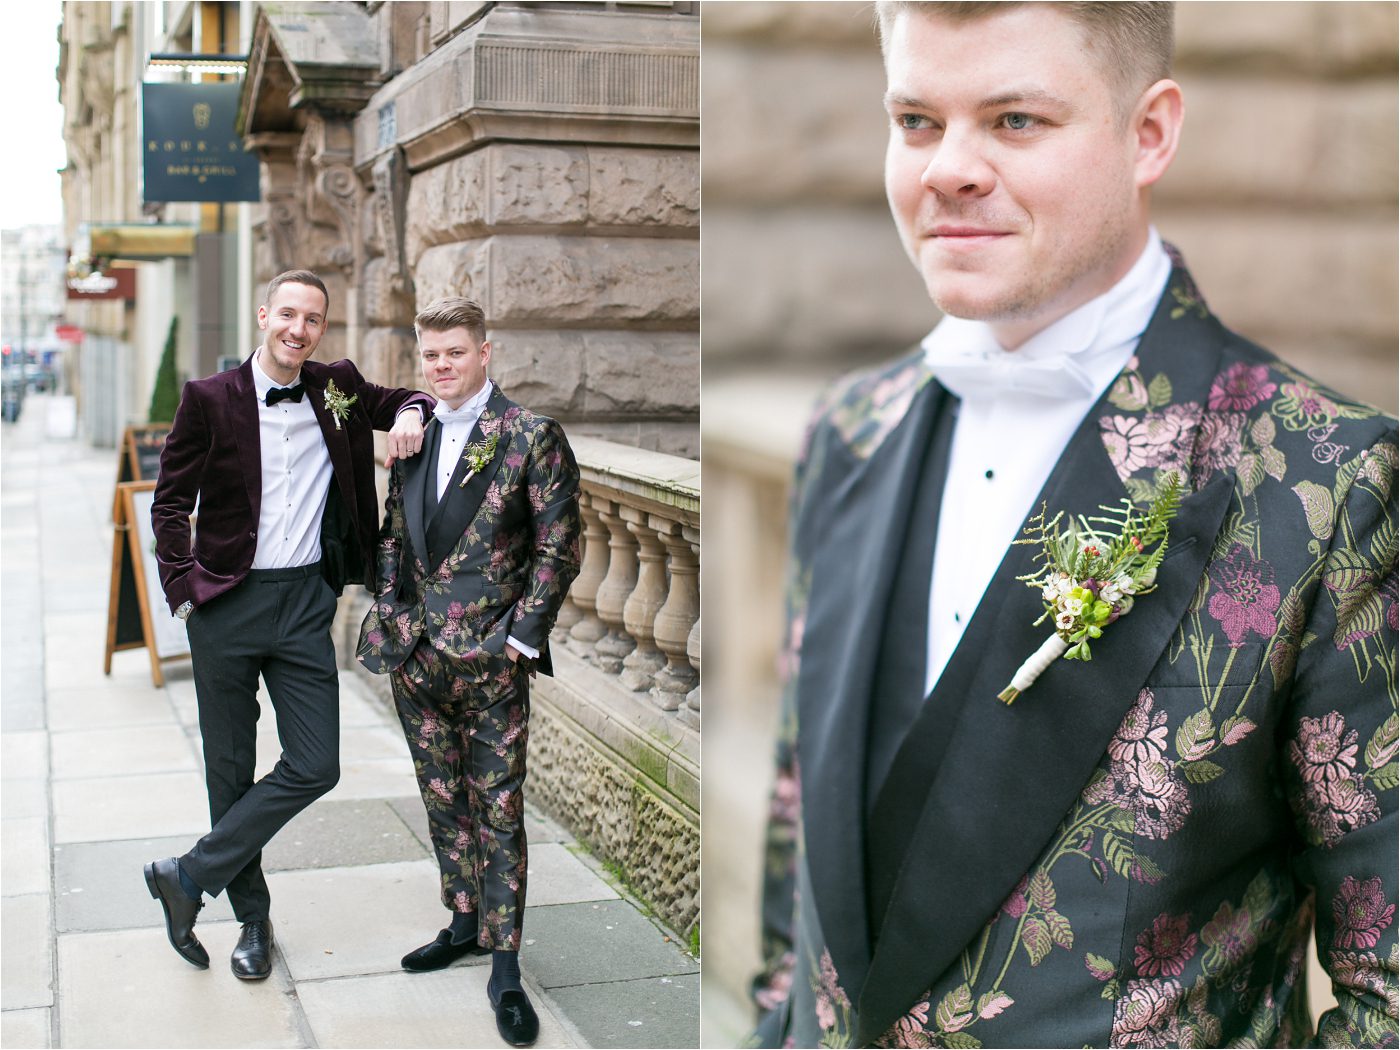 Joshua Kane bespoke suit for a fashionable groom